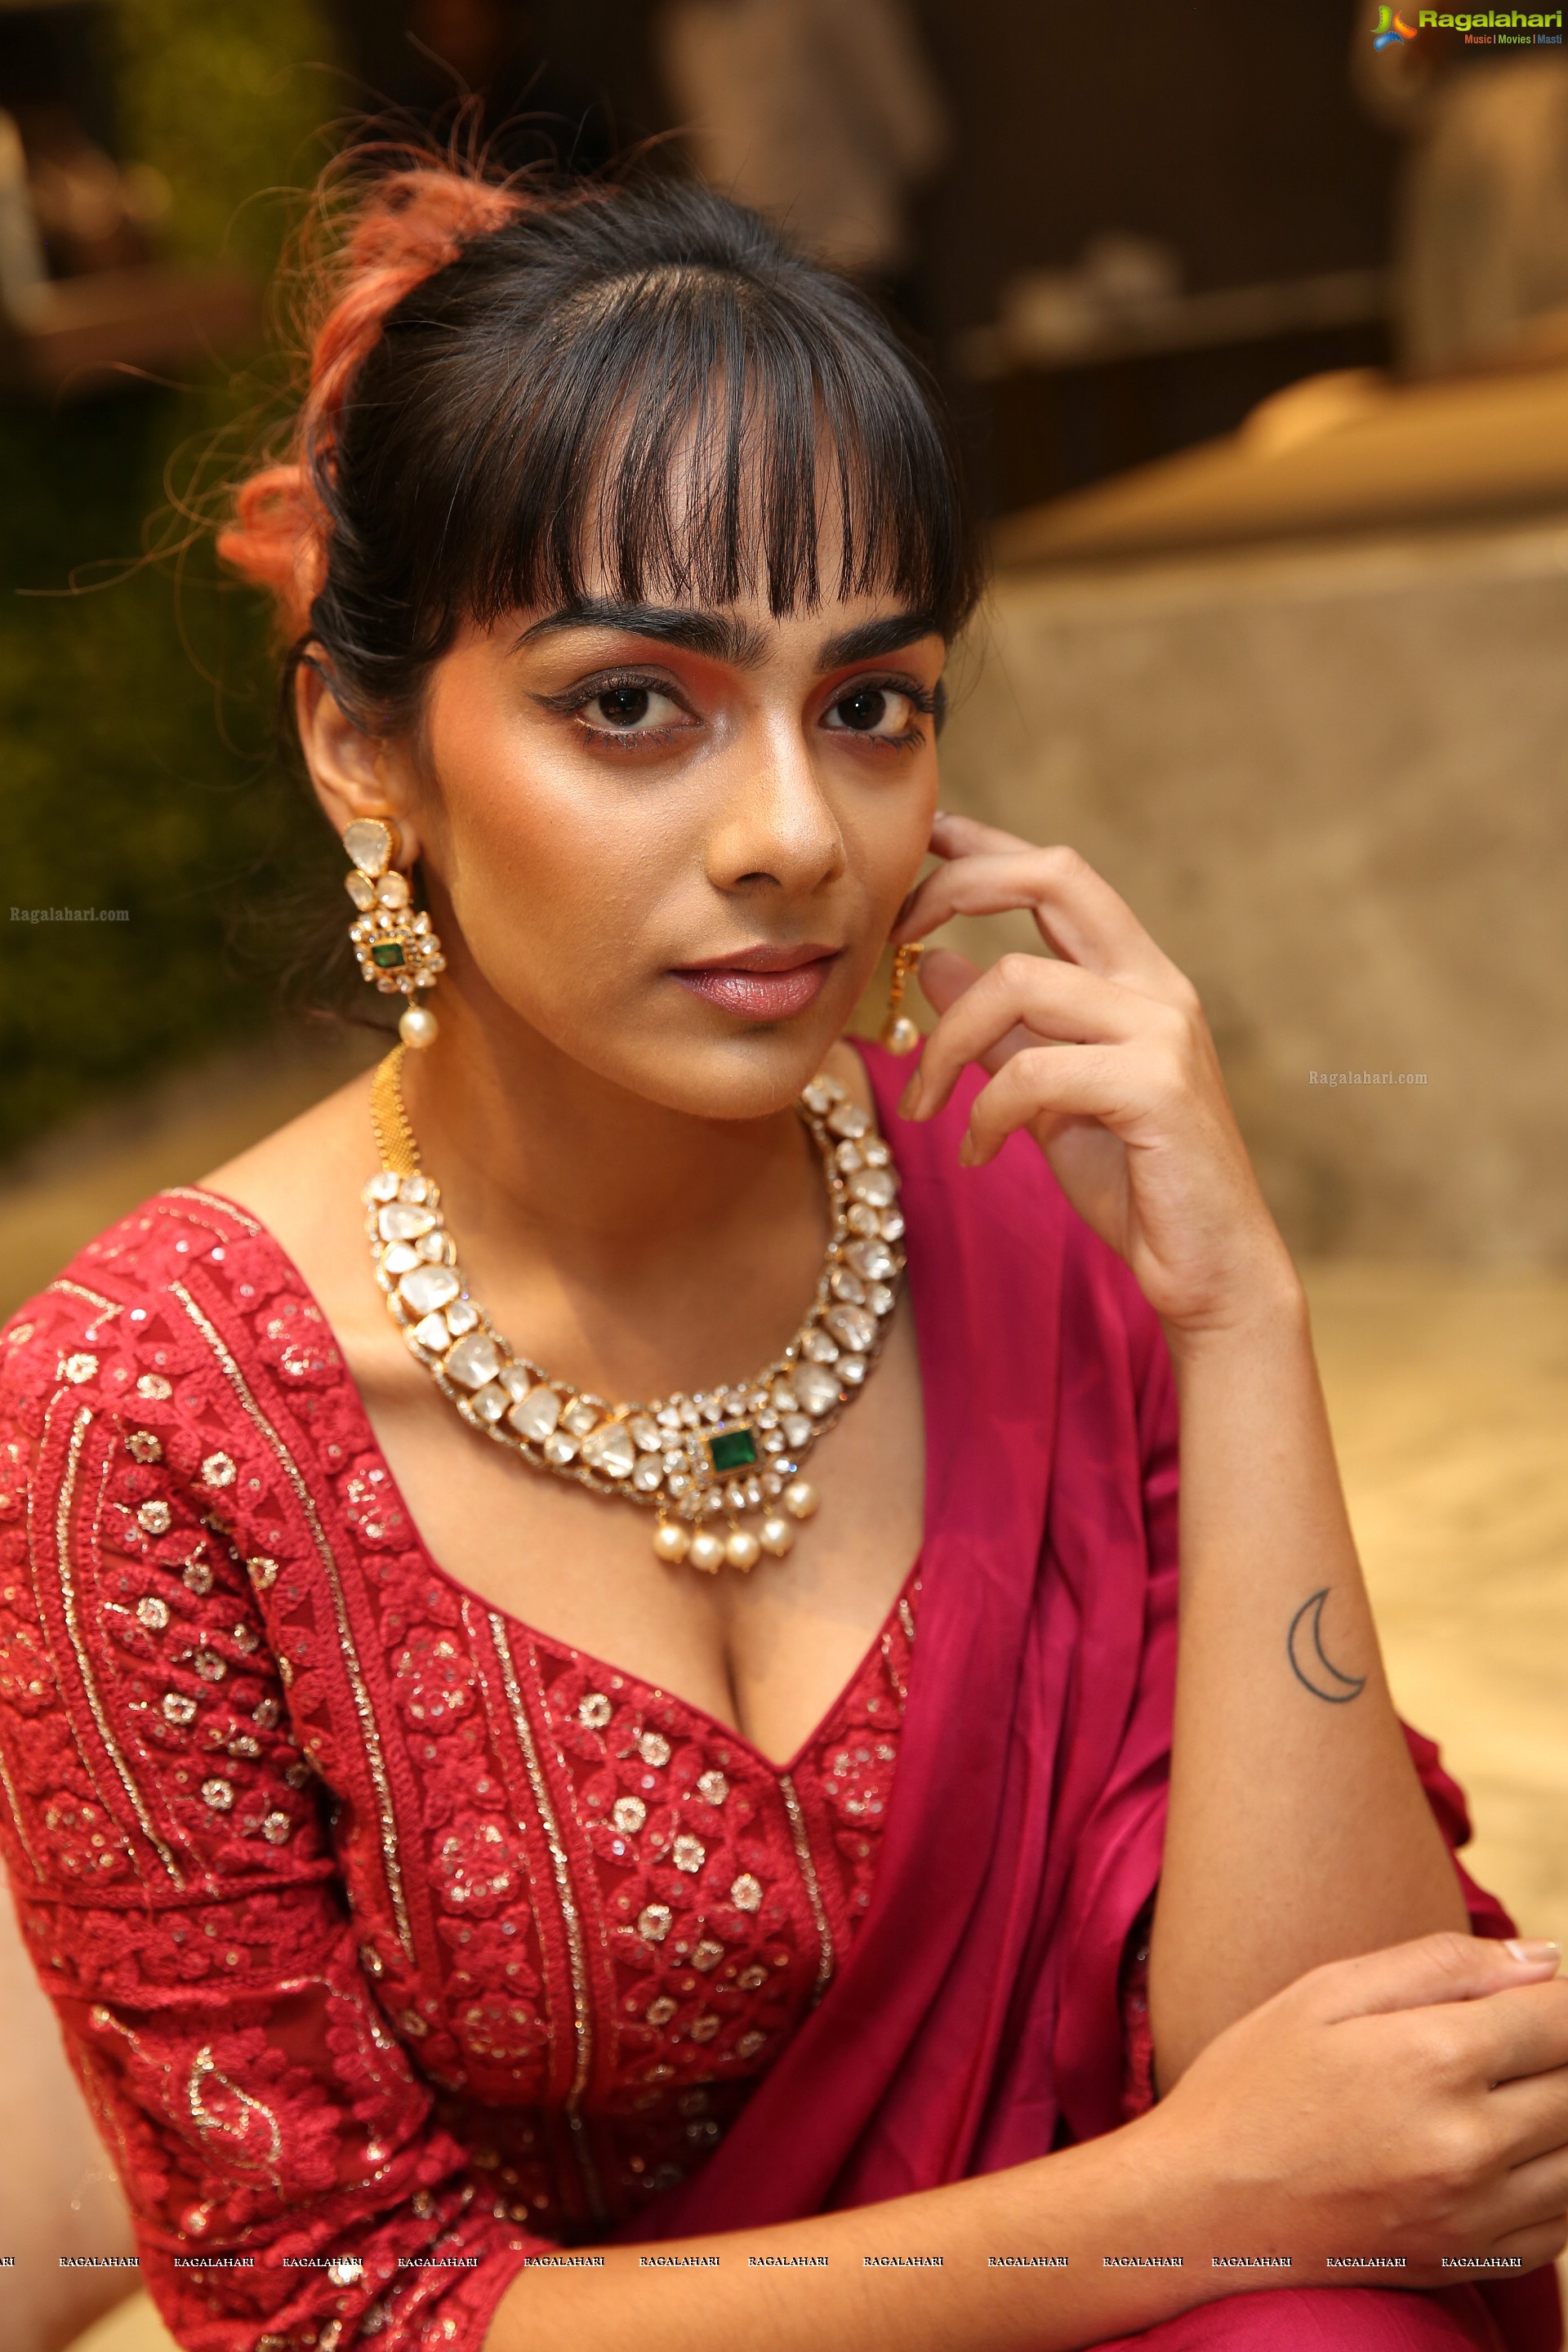 Rakshanda Kolhe (High definition) @ Nikitha Jewellery - The 9 Shades of Women